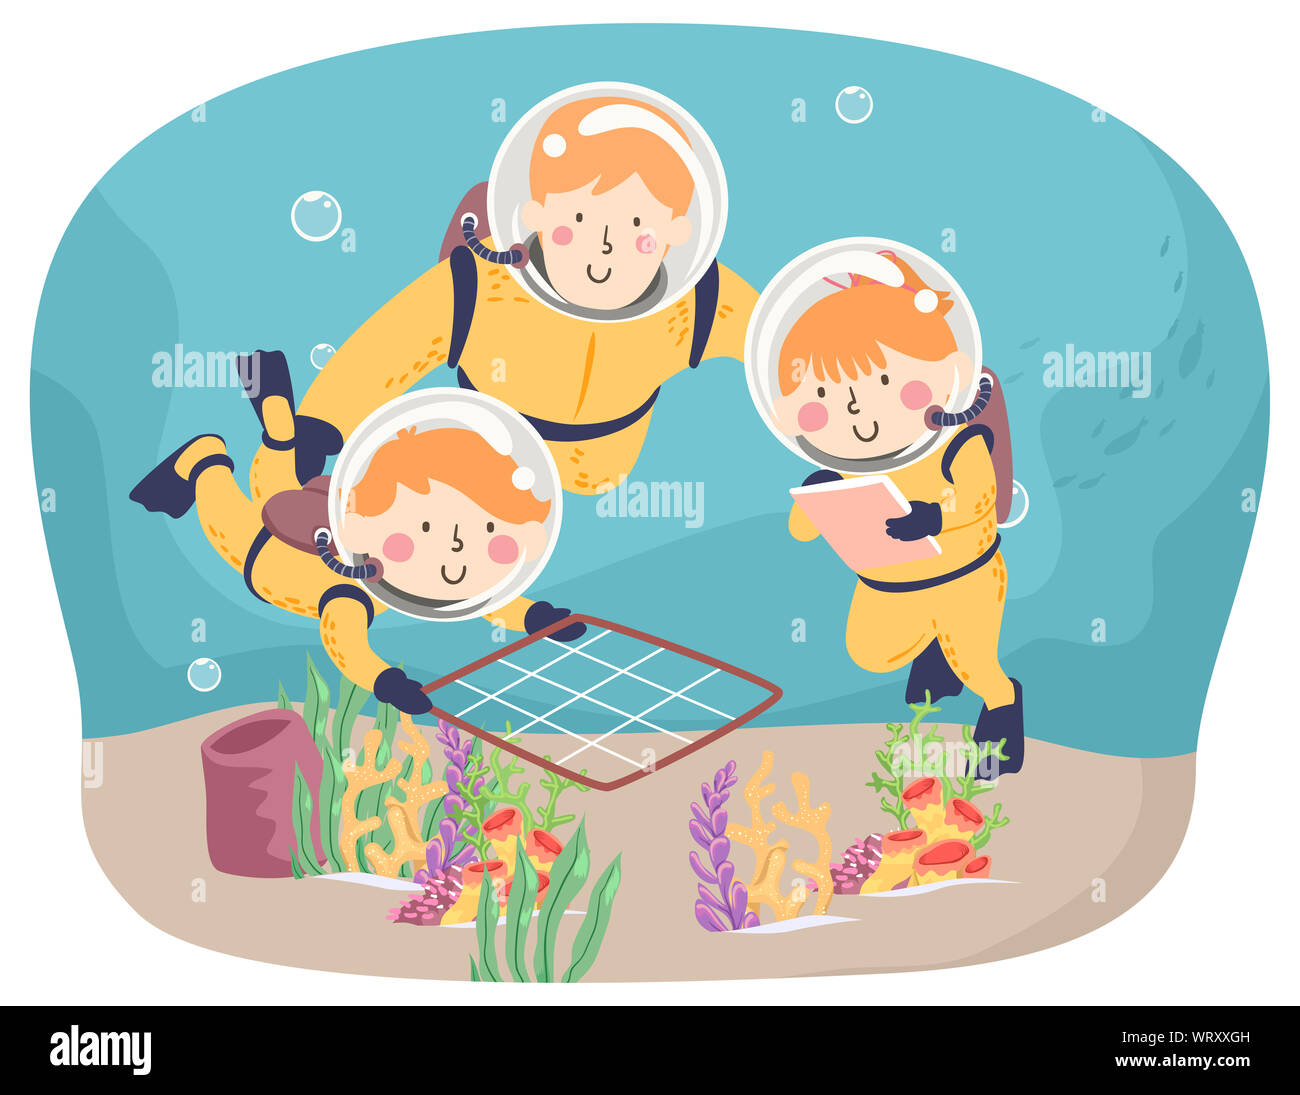 Illustration of Kids Scuba Diving with Teacher and Exploring Using Quadrat Method Stock Photo